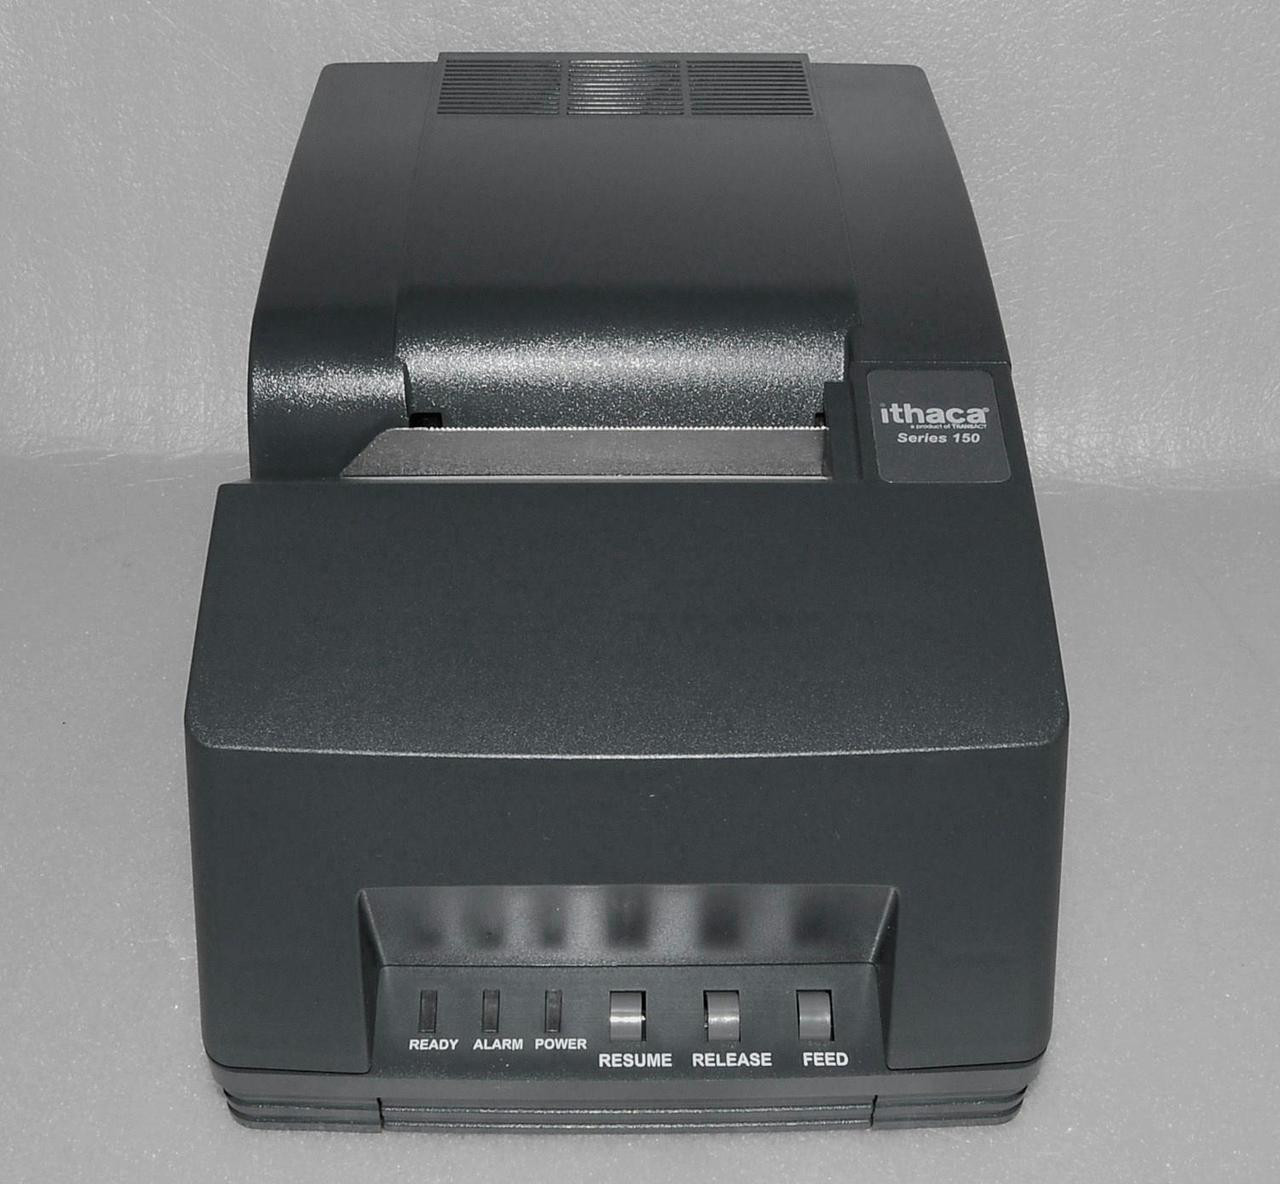 Ithaca 150 Series (153) Impact Receipt Printer